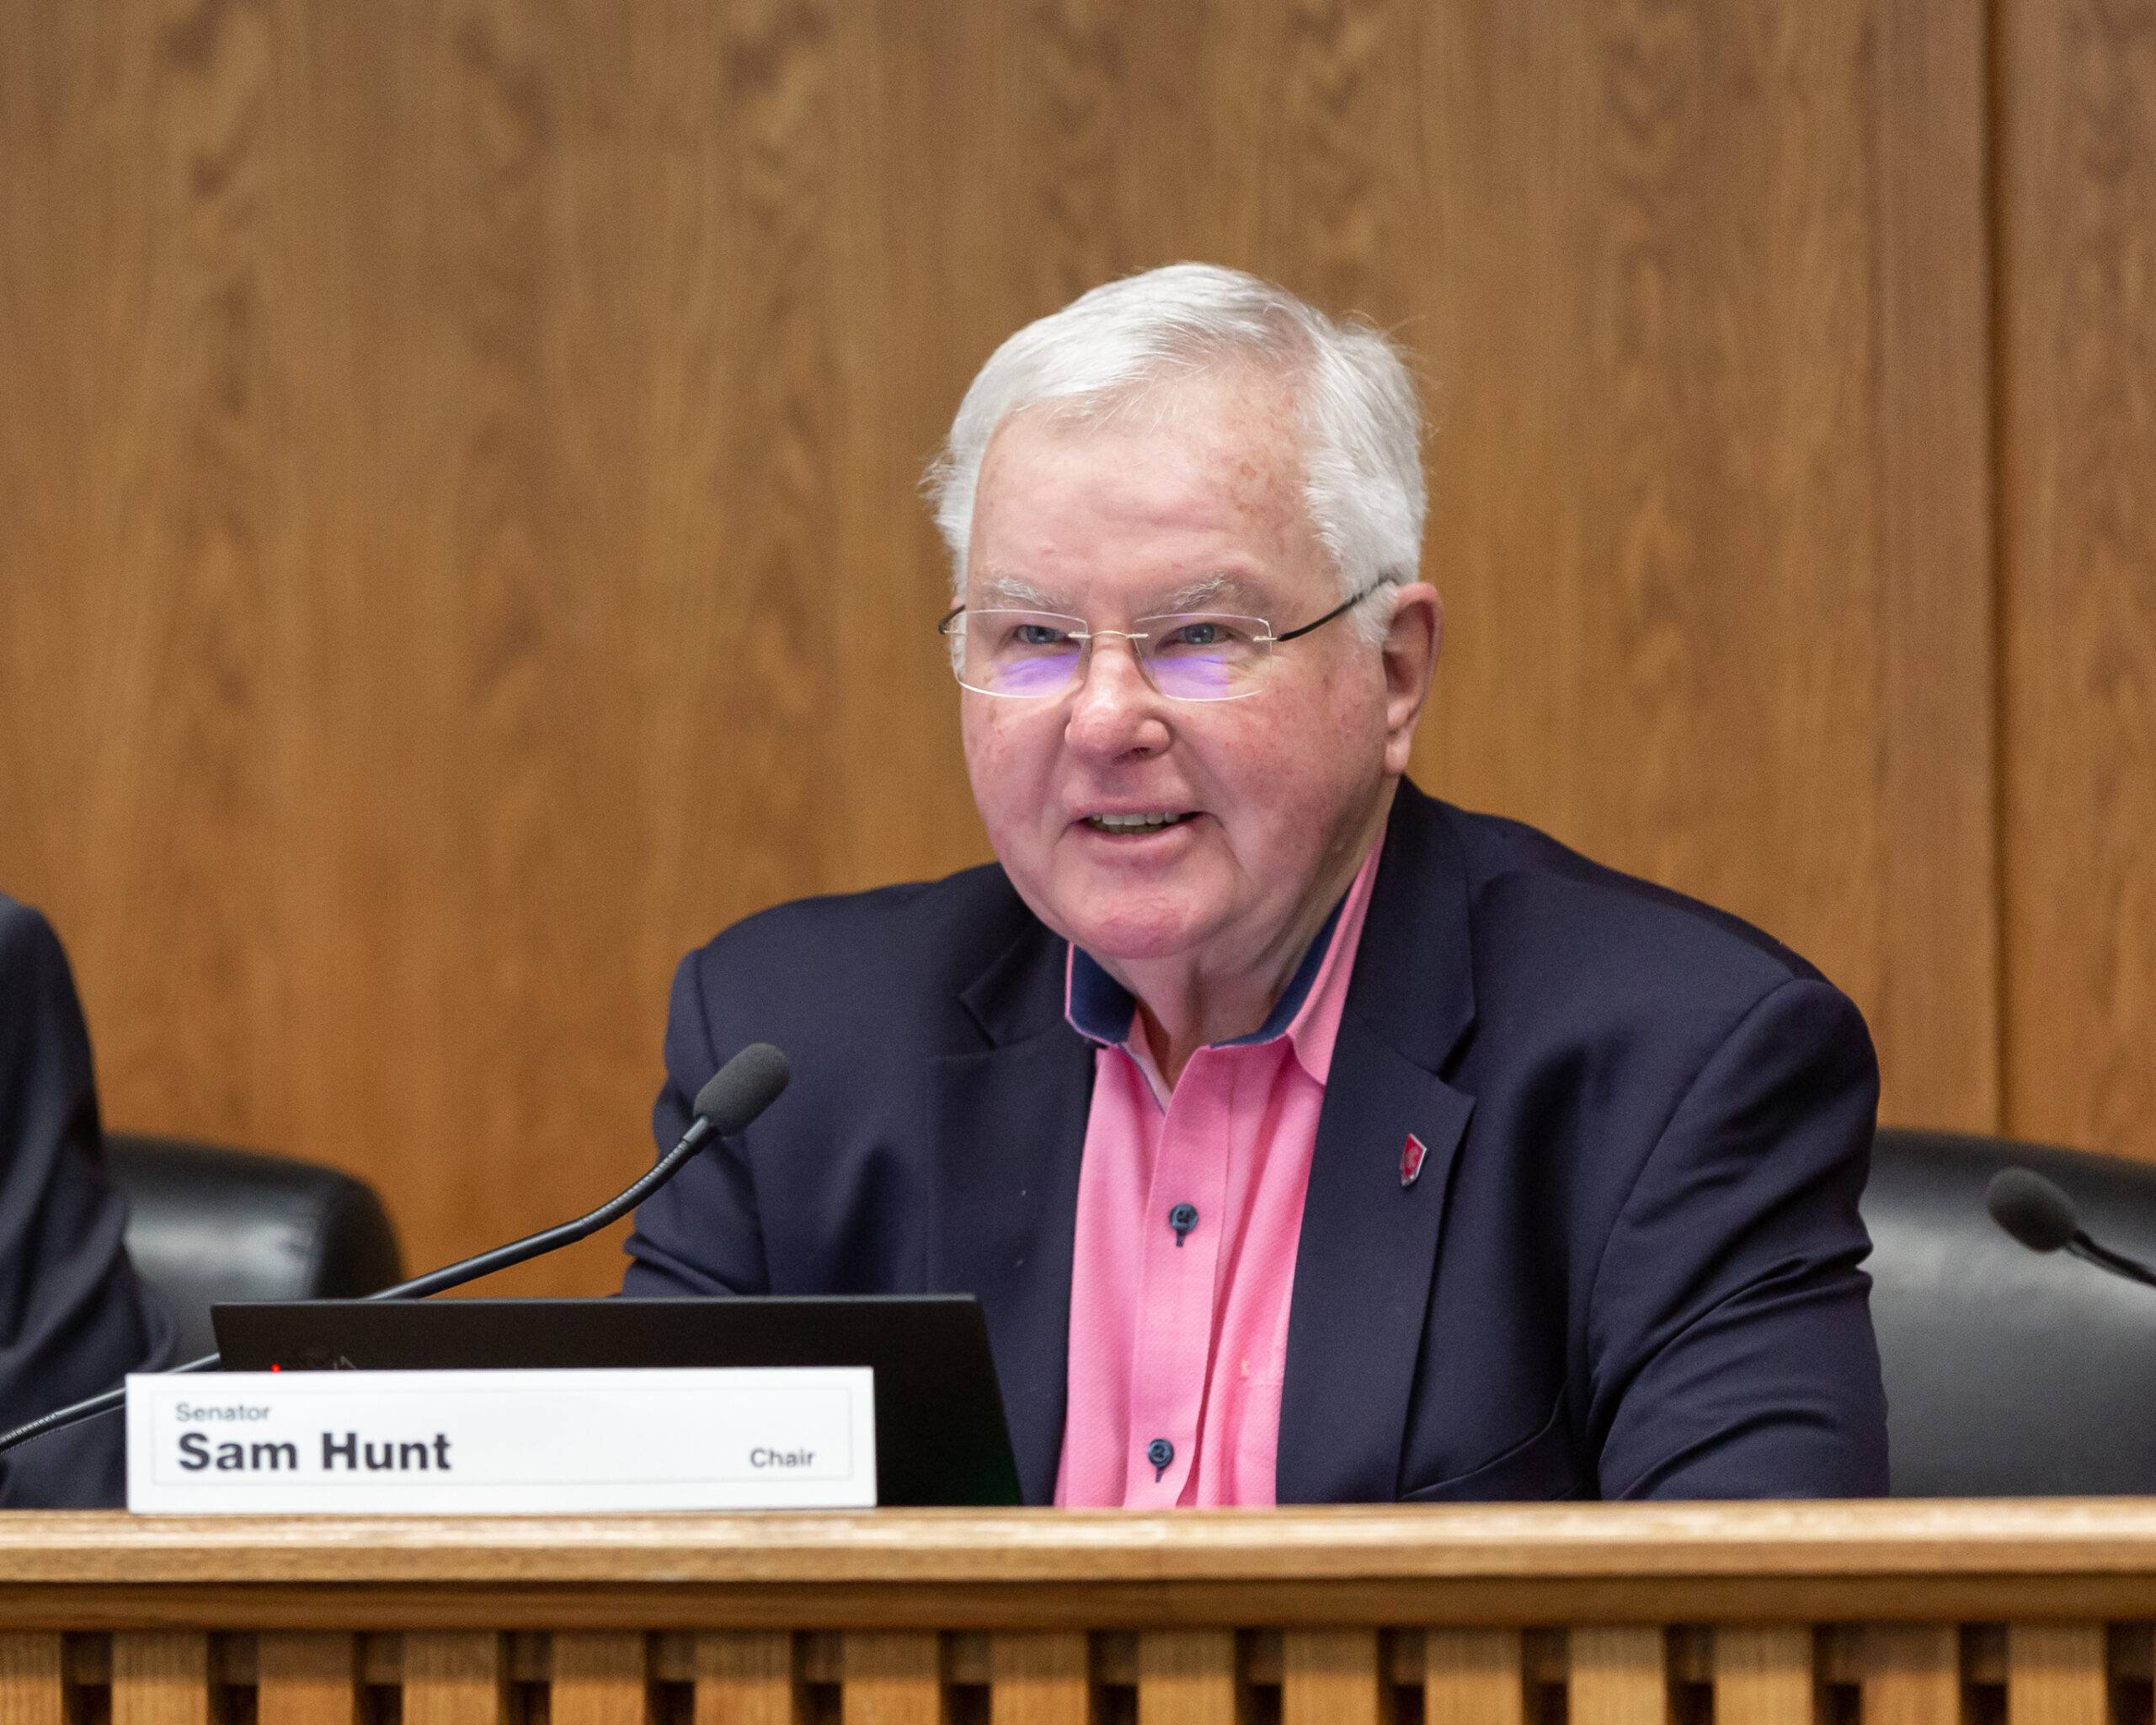 Senator Sam Hunt chairing a committee meeting